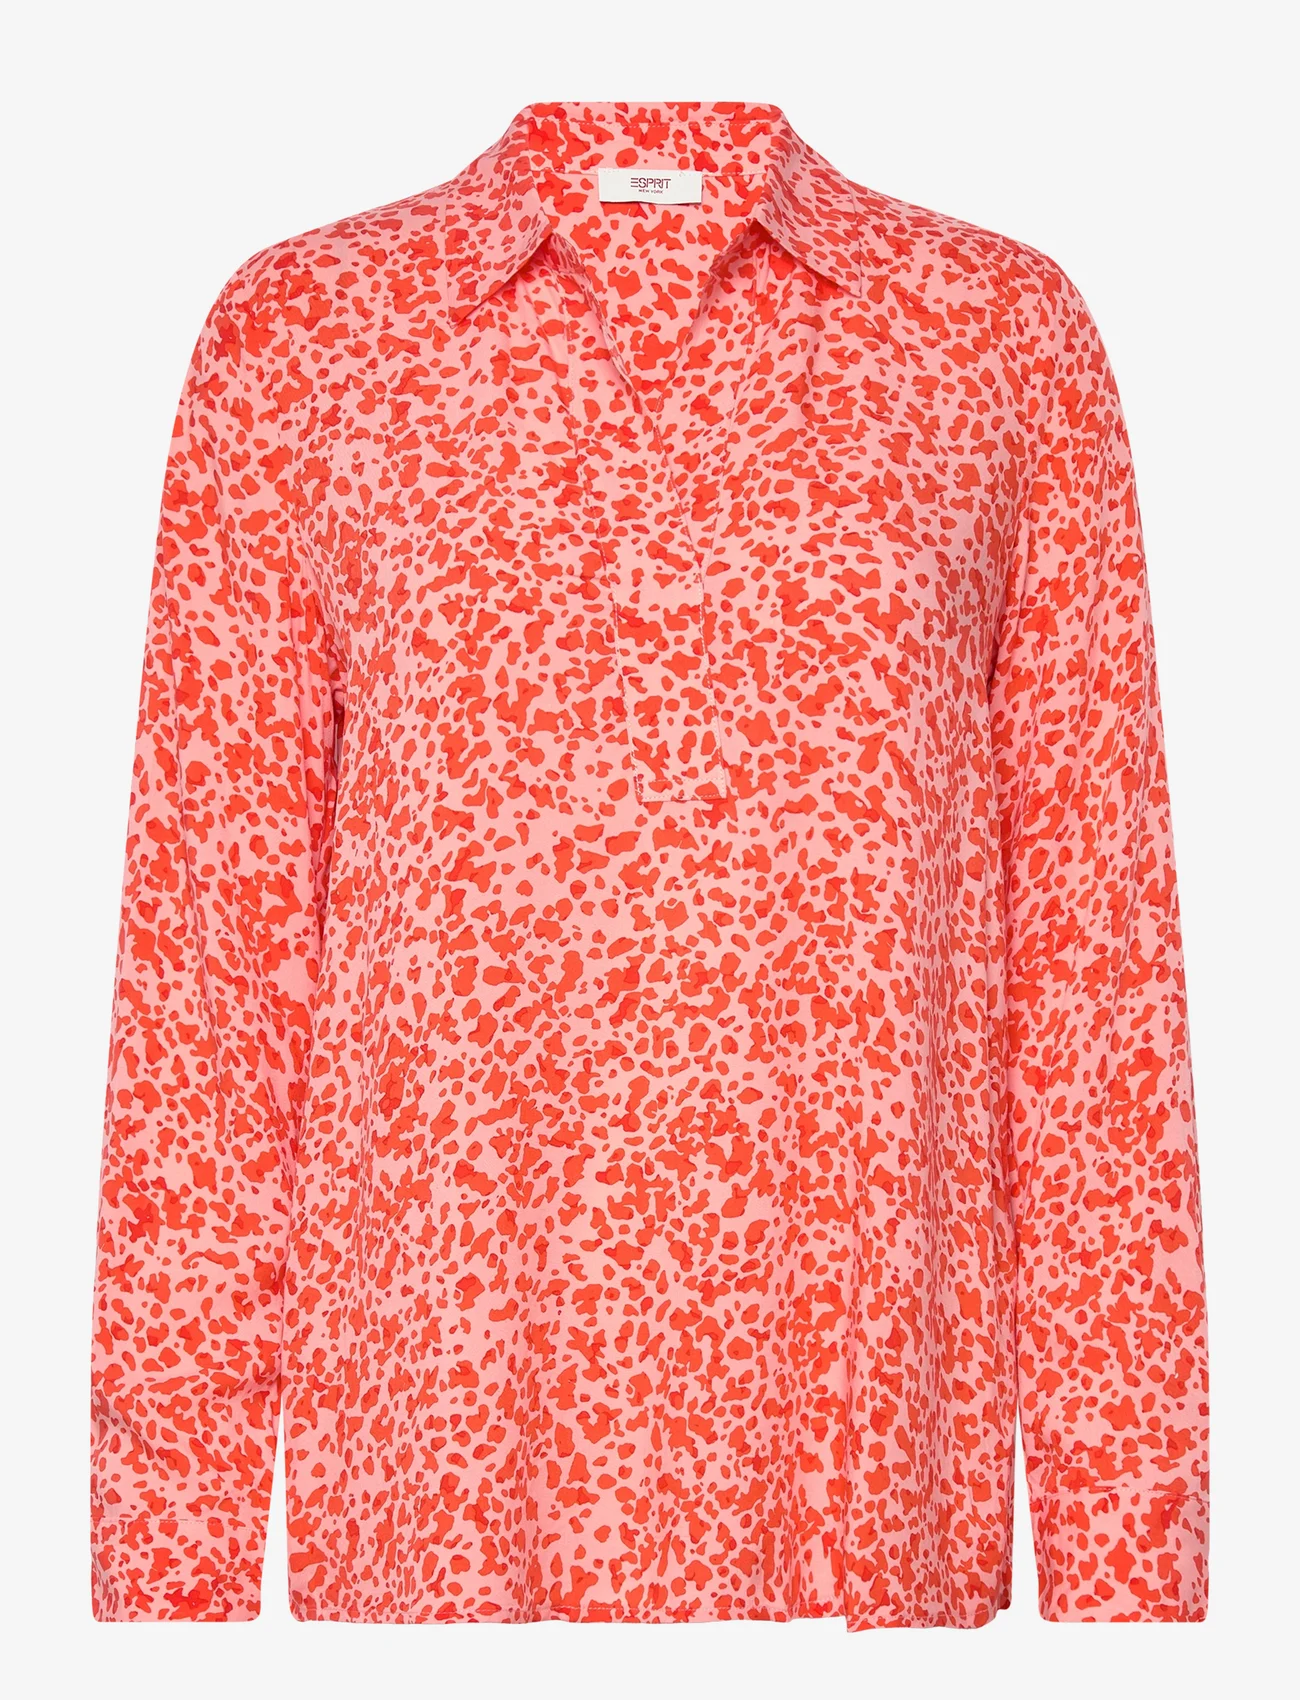 Esprit Casual - Blouses woven - pitkähihaiset paidat - bright orange 4 - 0